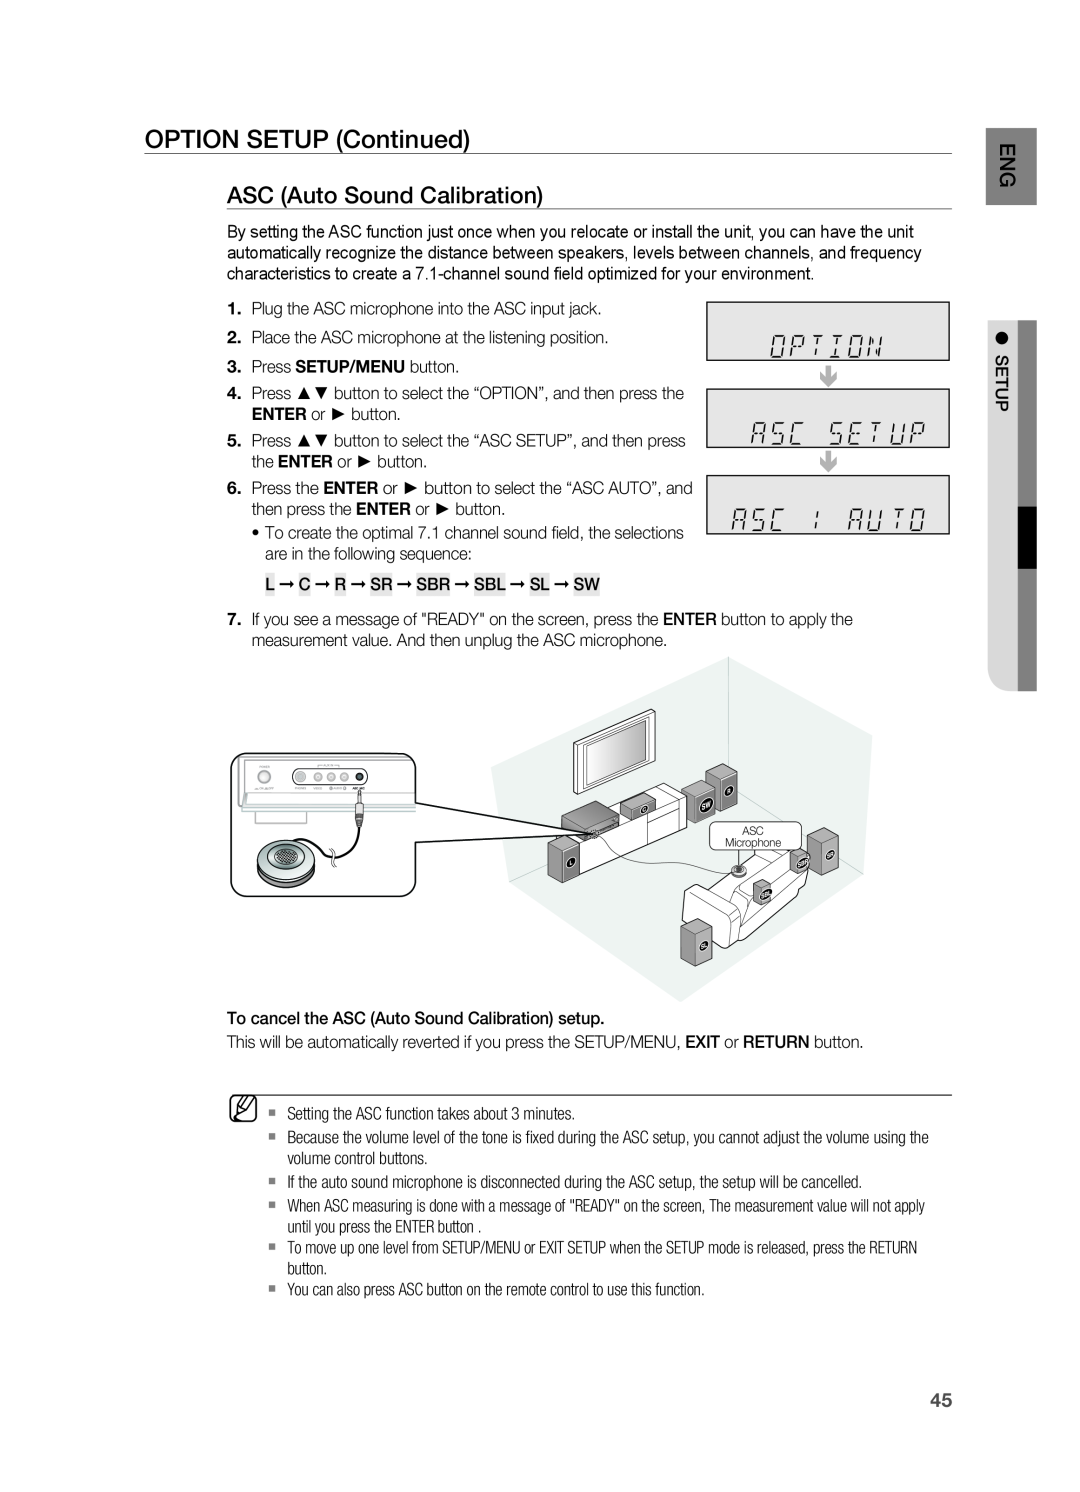 Samsung HT-AS730S user manual option setup Continued, ASC Auto Sound Calibration 